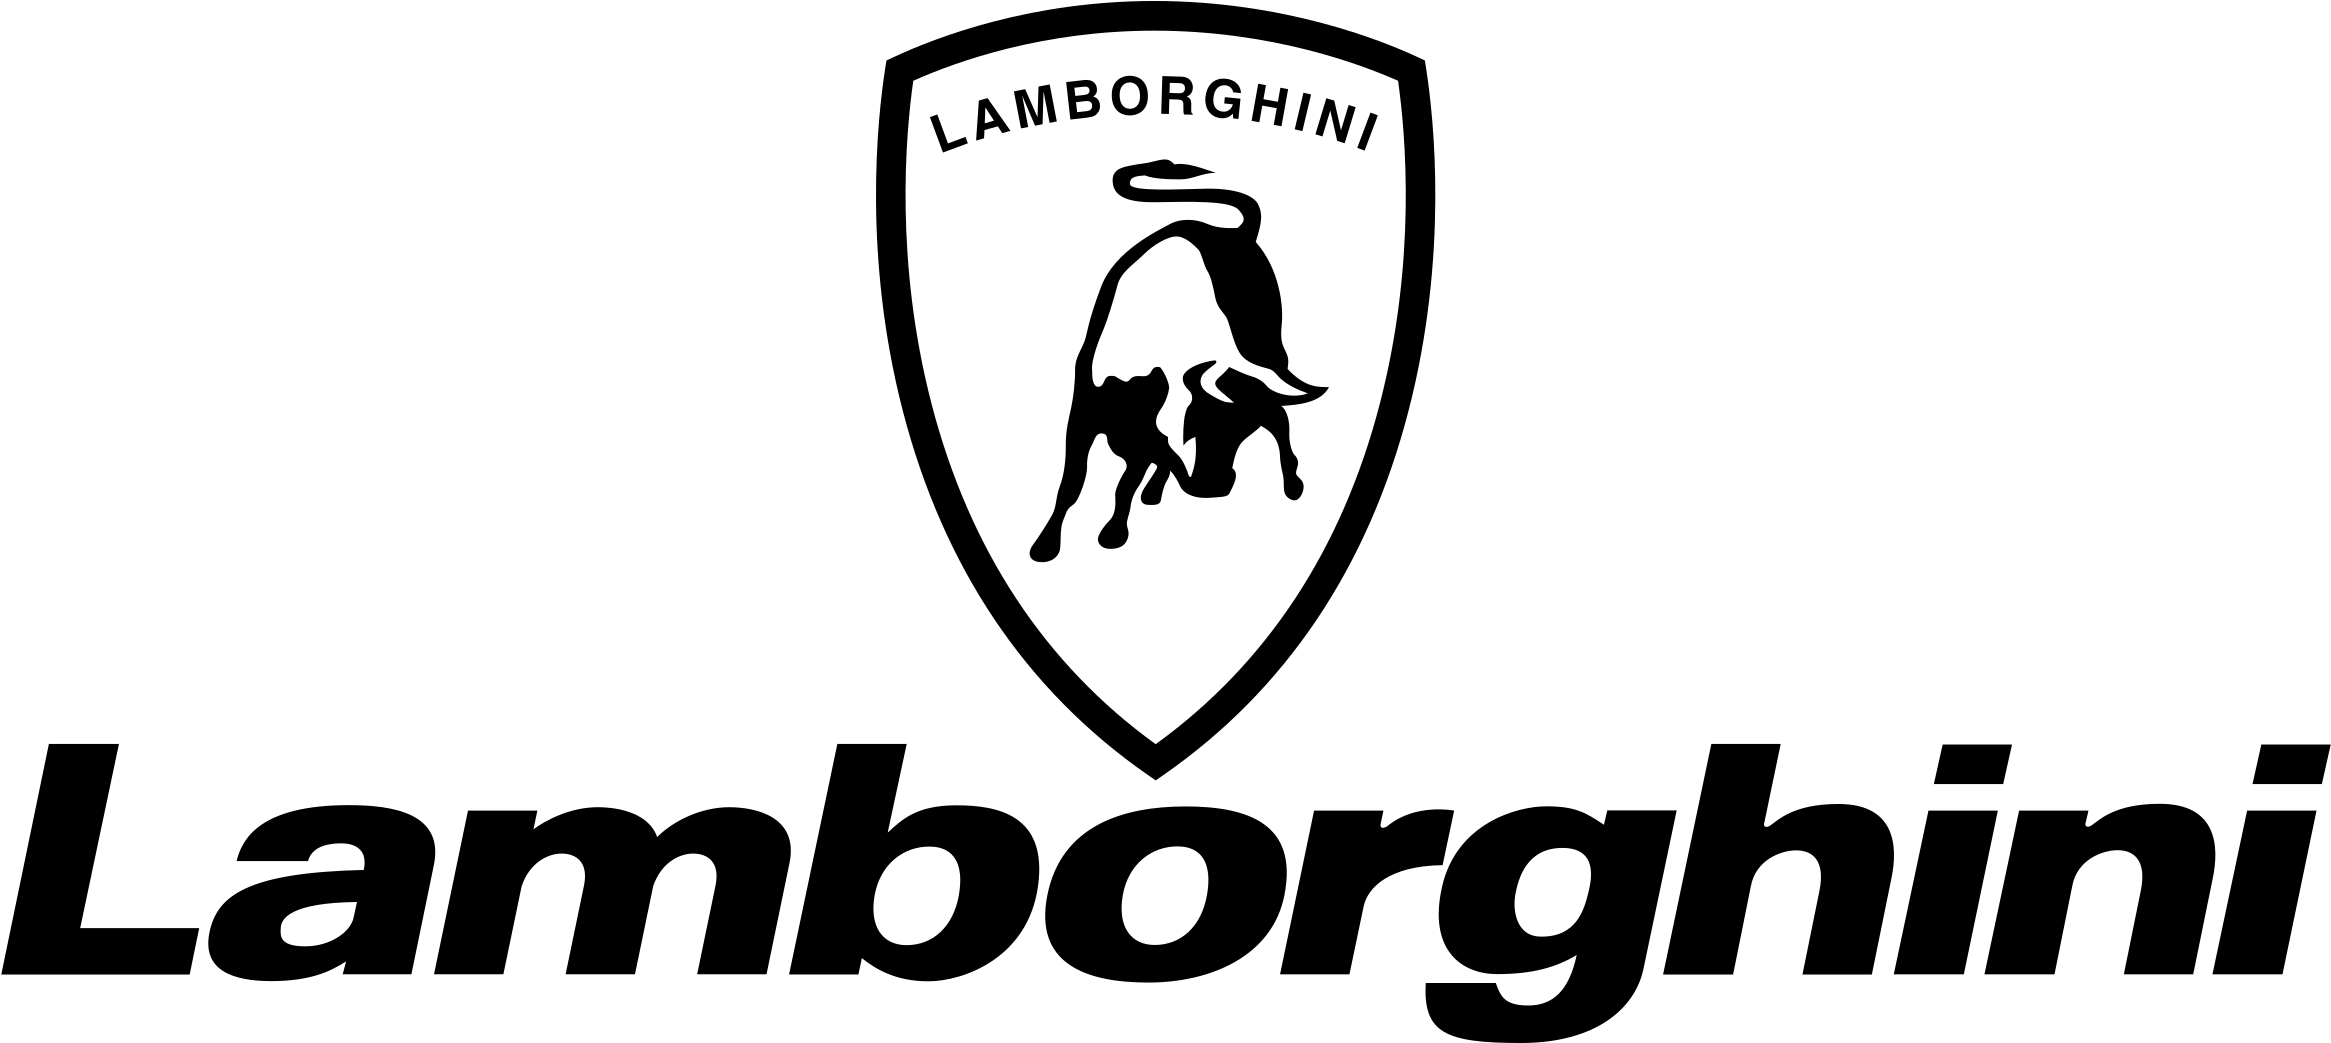 Download Free Vector Lamborghini Logo - Lamborghini Logo 1974 PNG Image  with No Background 